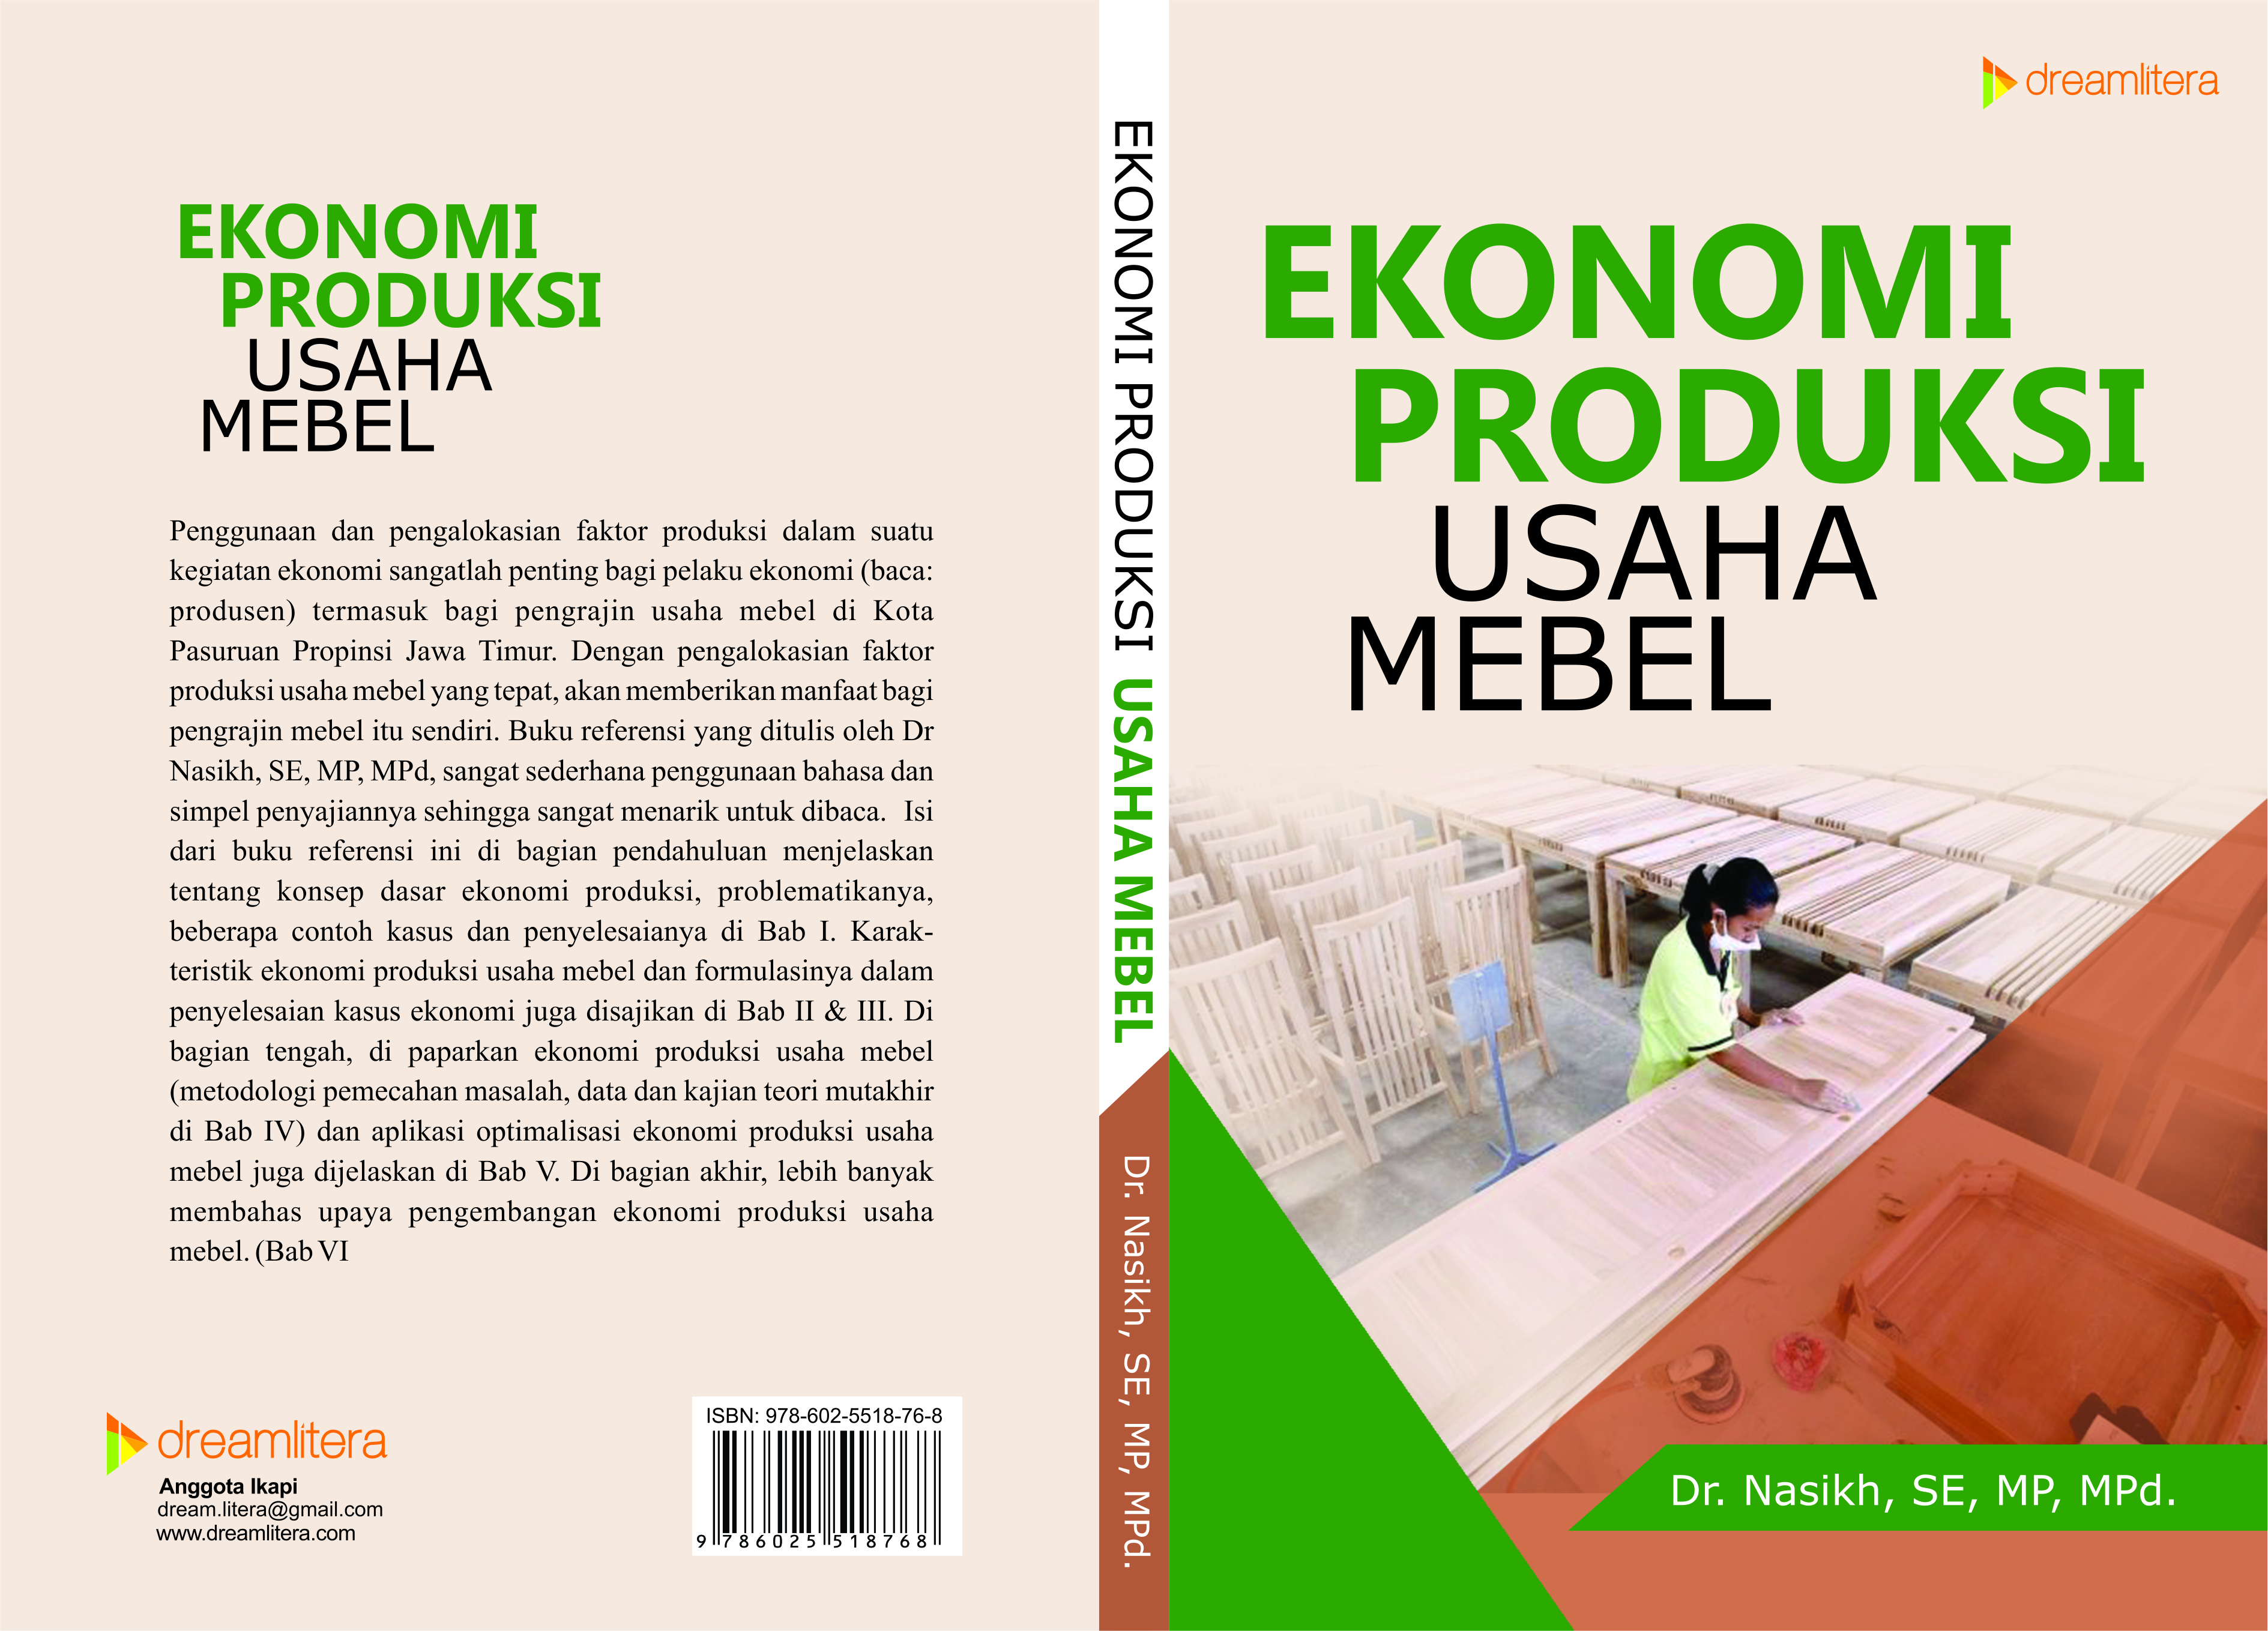 Buku "EKONOMI PRODUKSI USAHA MEBEL" karya Dr. Nasikh, S.E., M.P., M.Pd, EKP – Fakultas Ekonomi